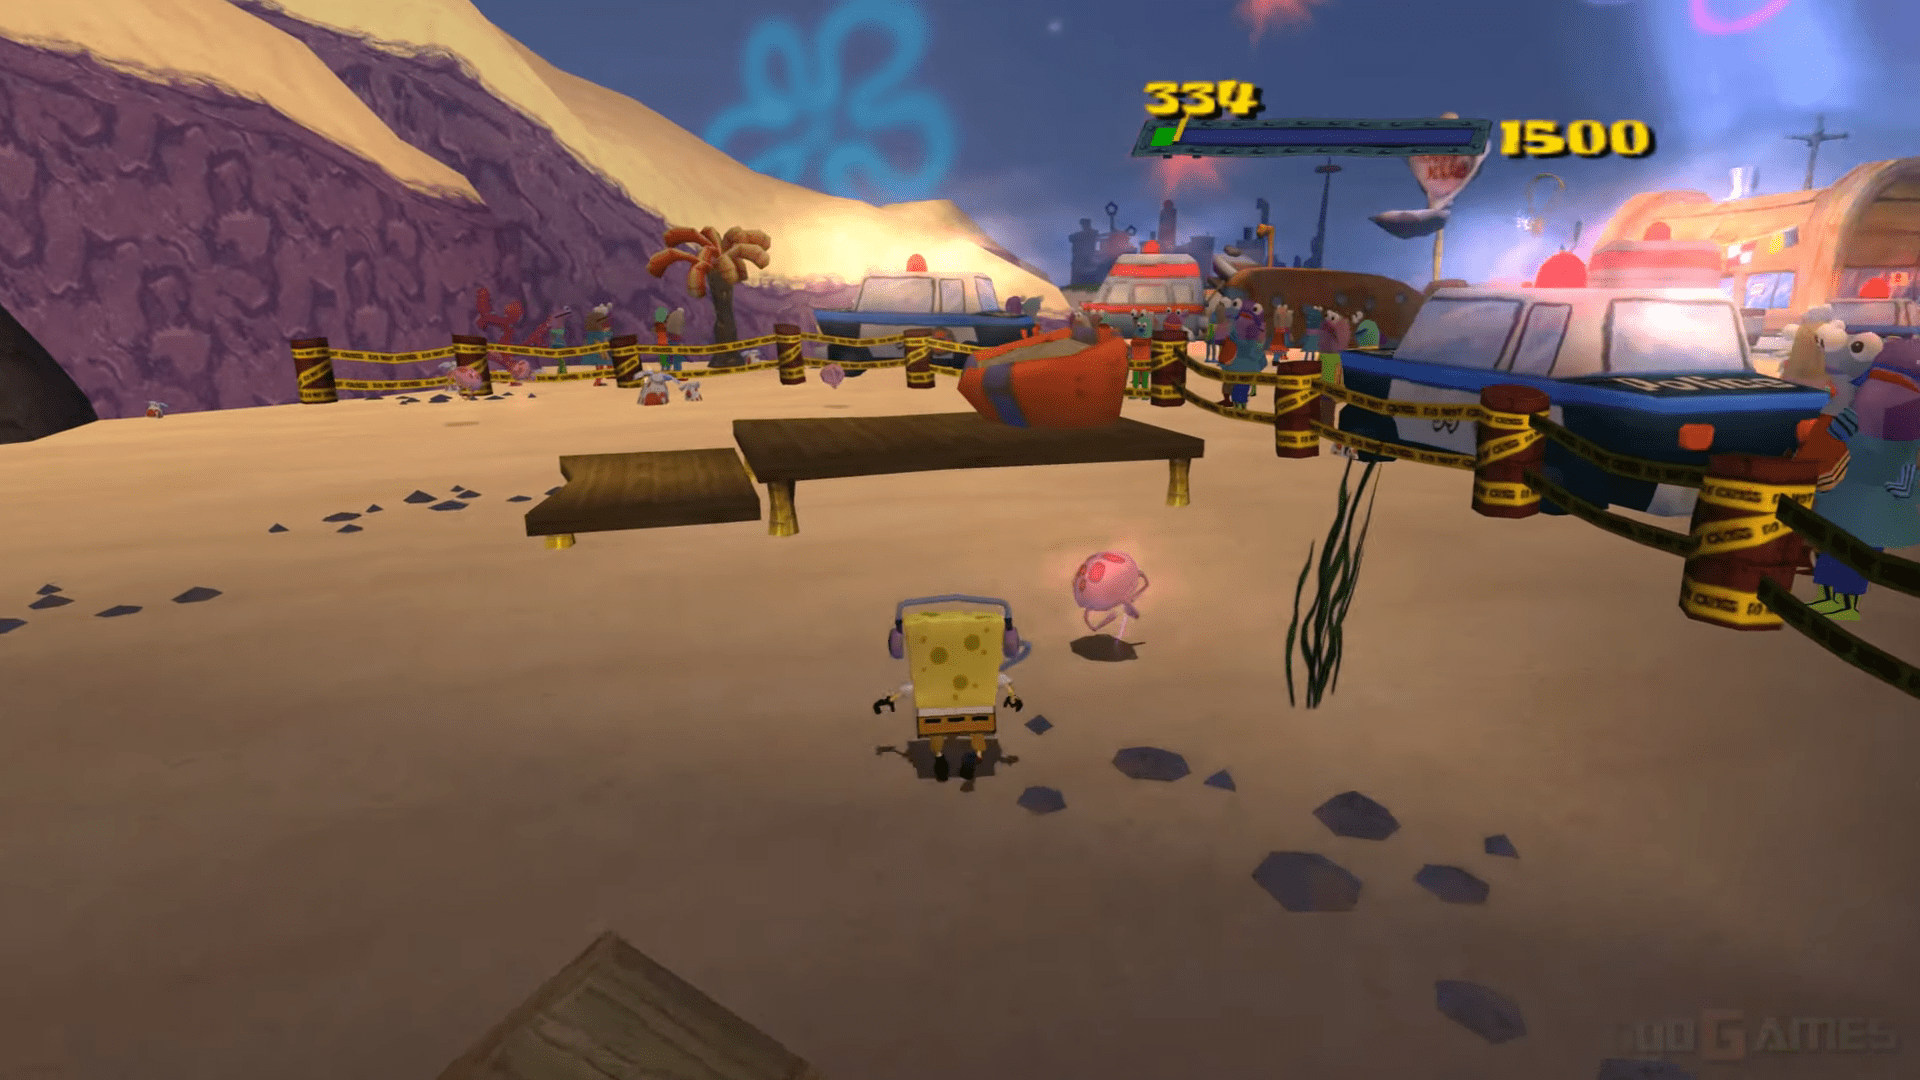 the spongebob squarepants movie videogame